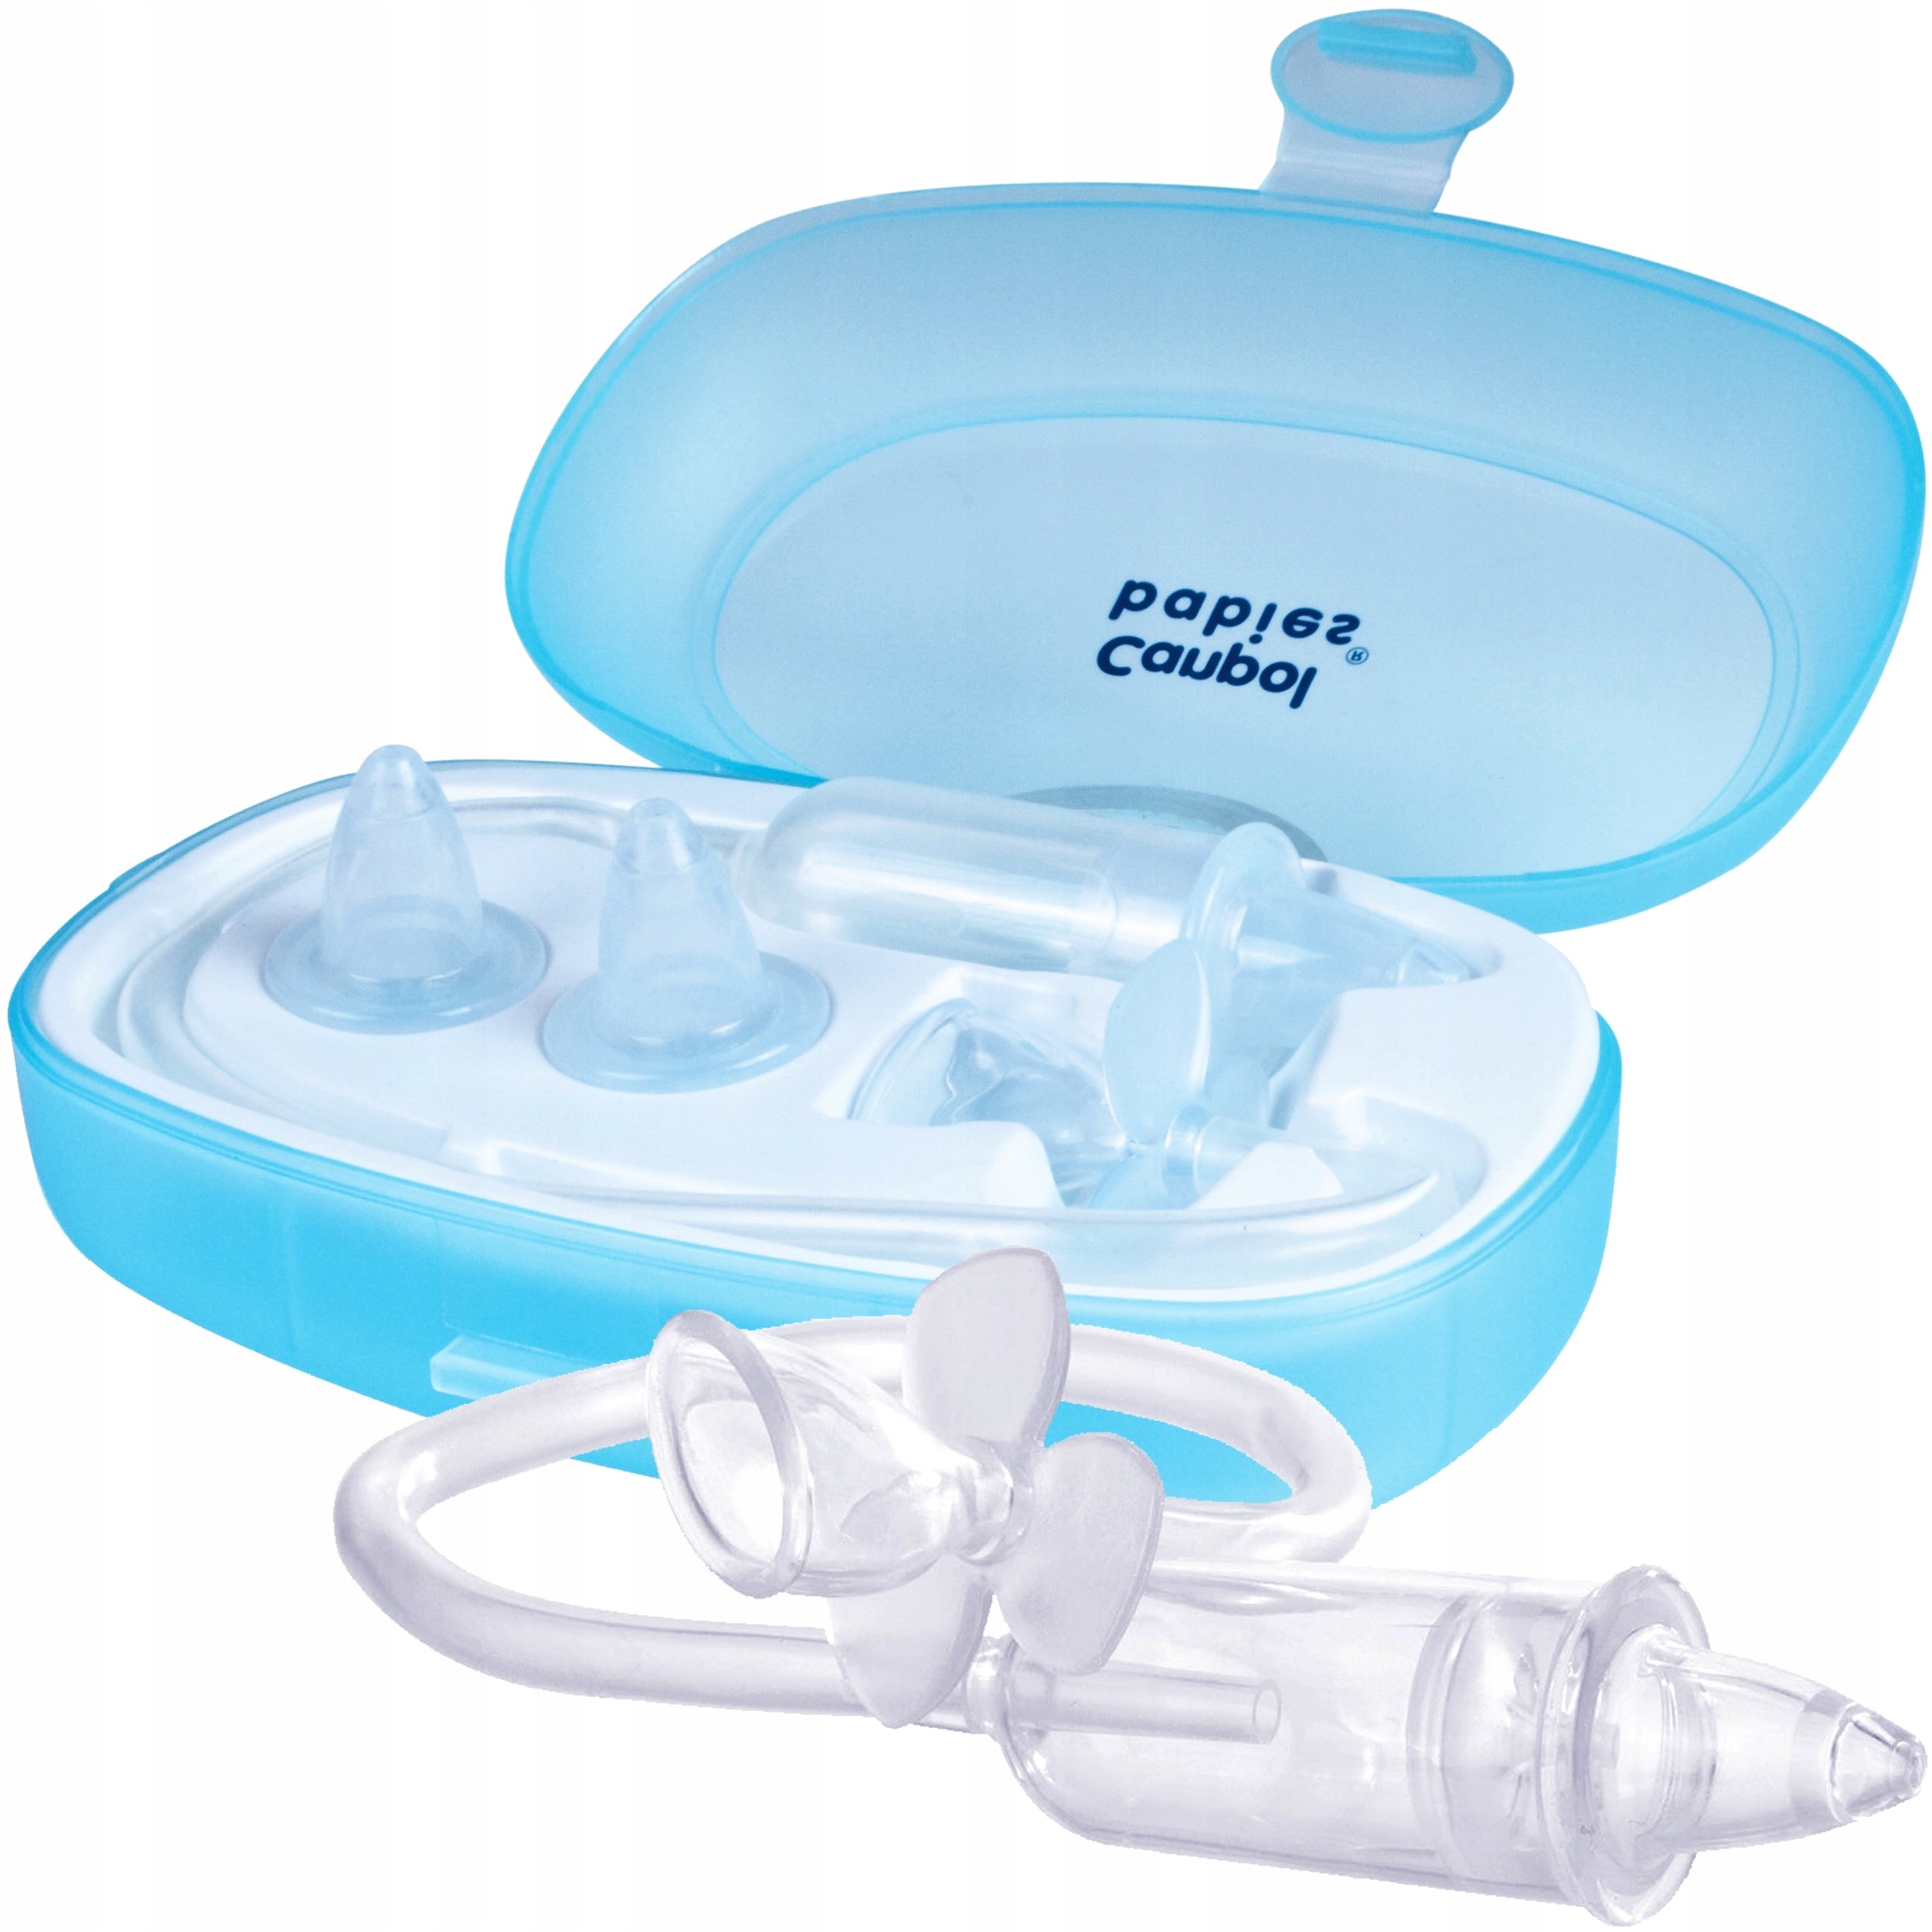 Canpol Babies: nasal aspirator with soft tip